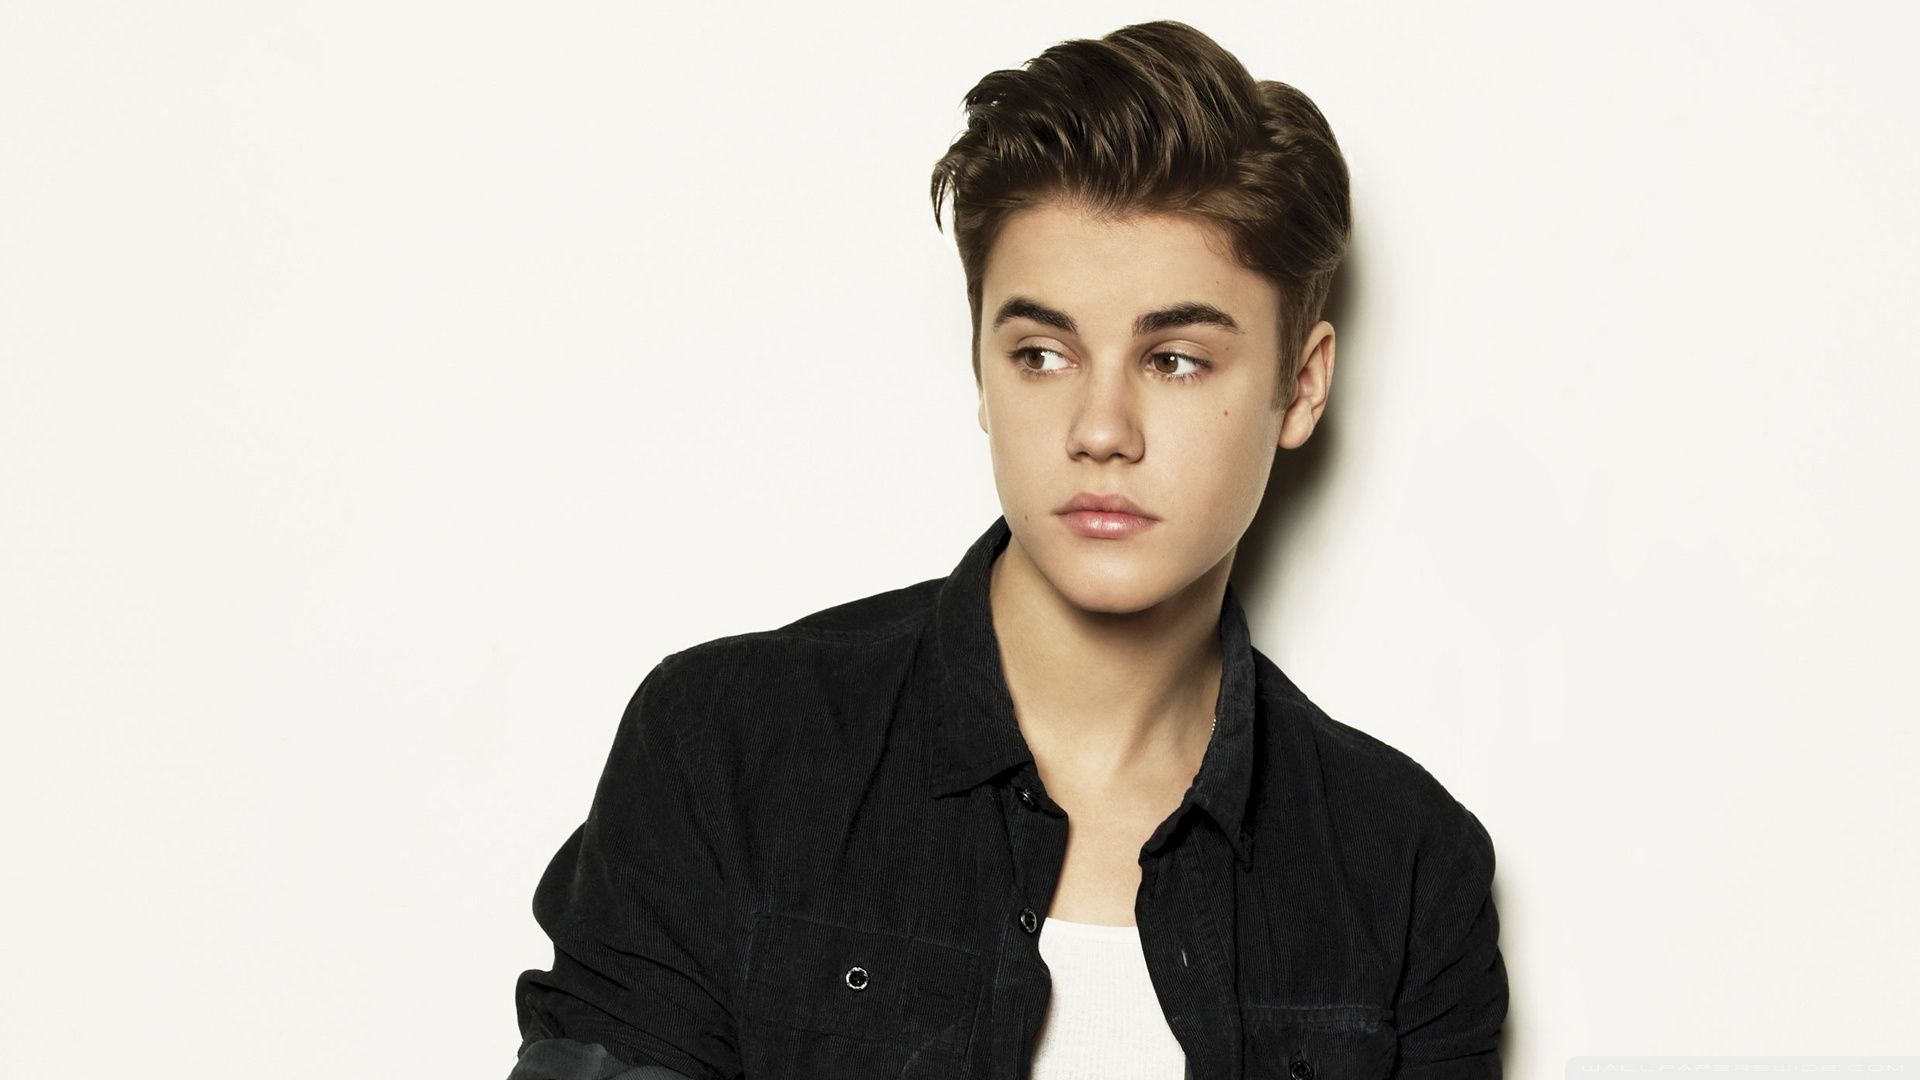 Young Justin Bieber Wallpaper | HD Wallpapers